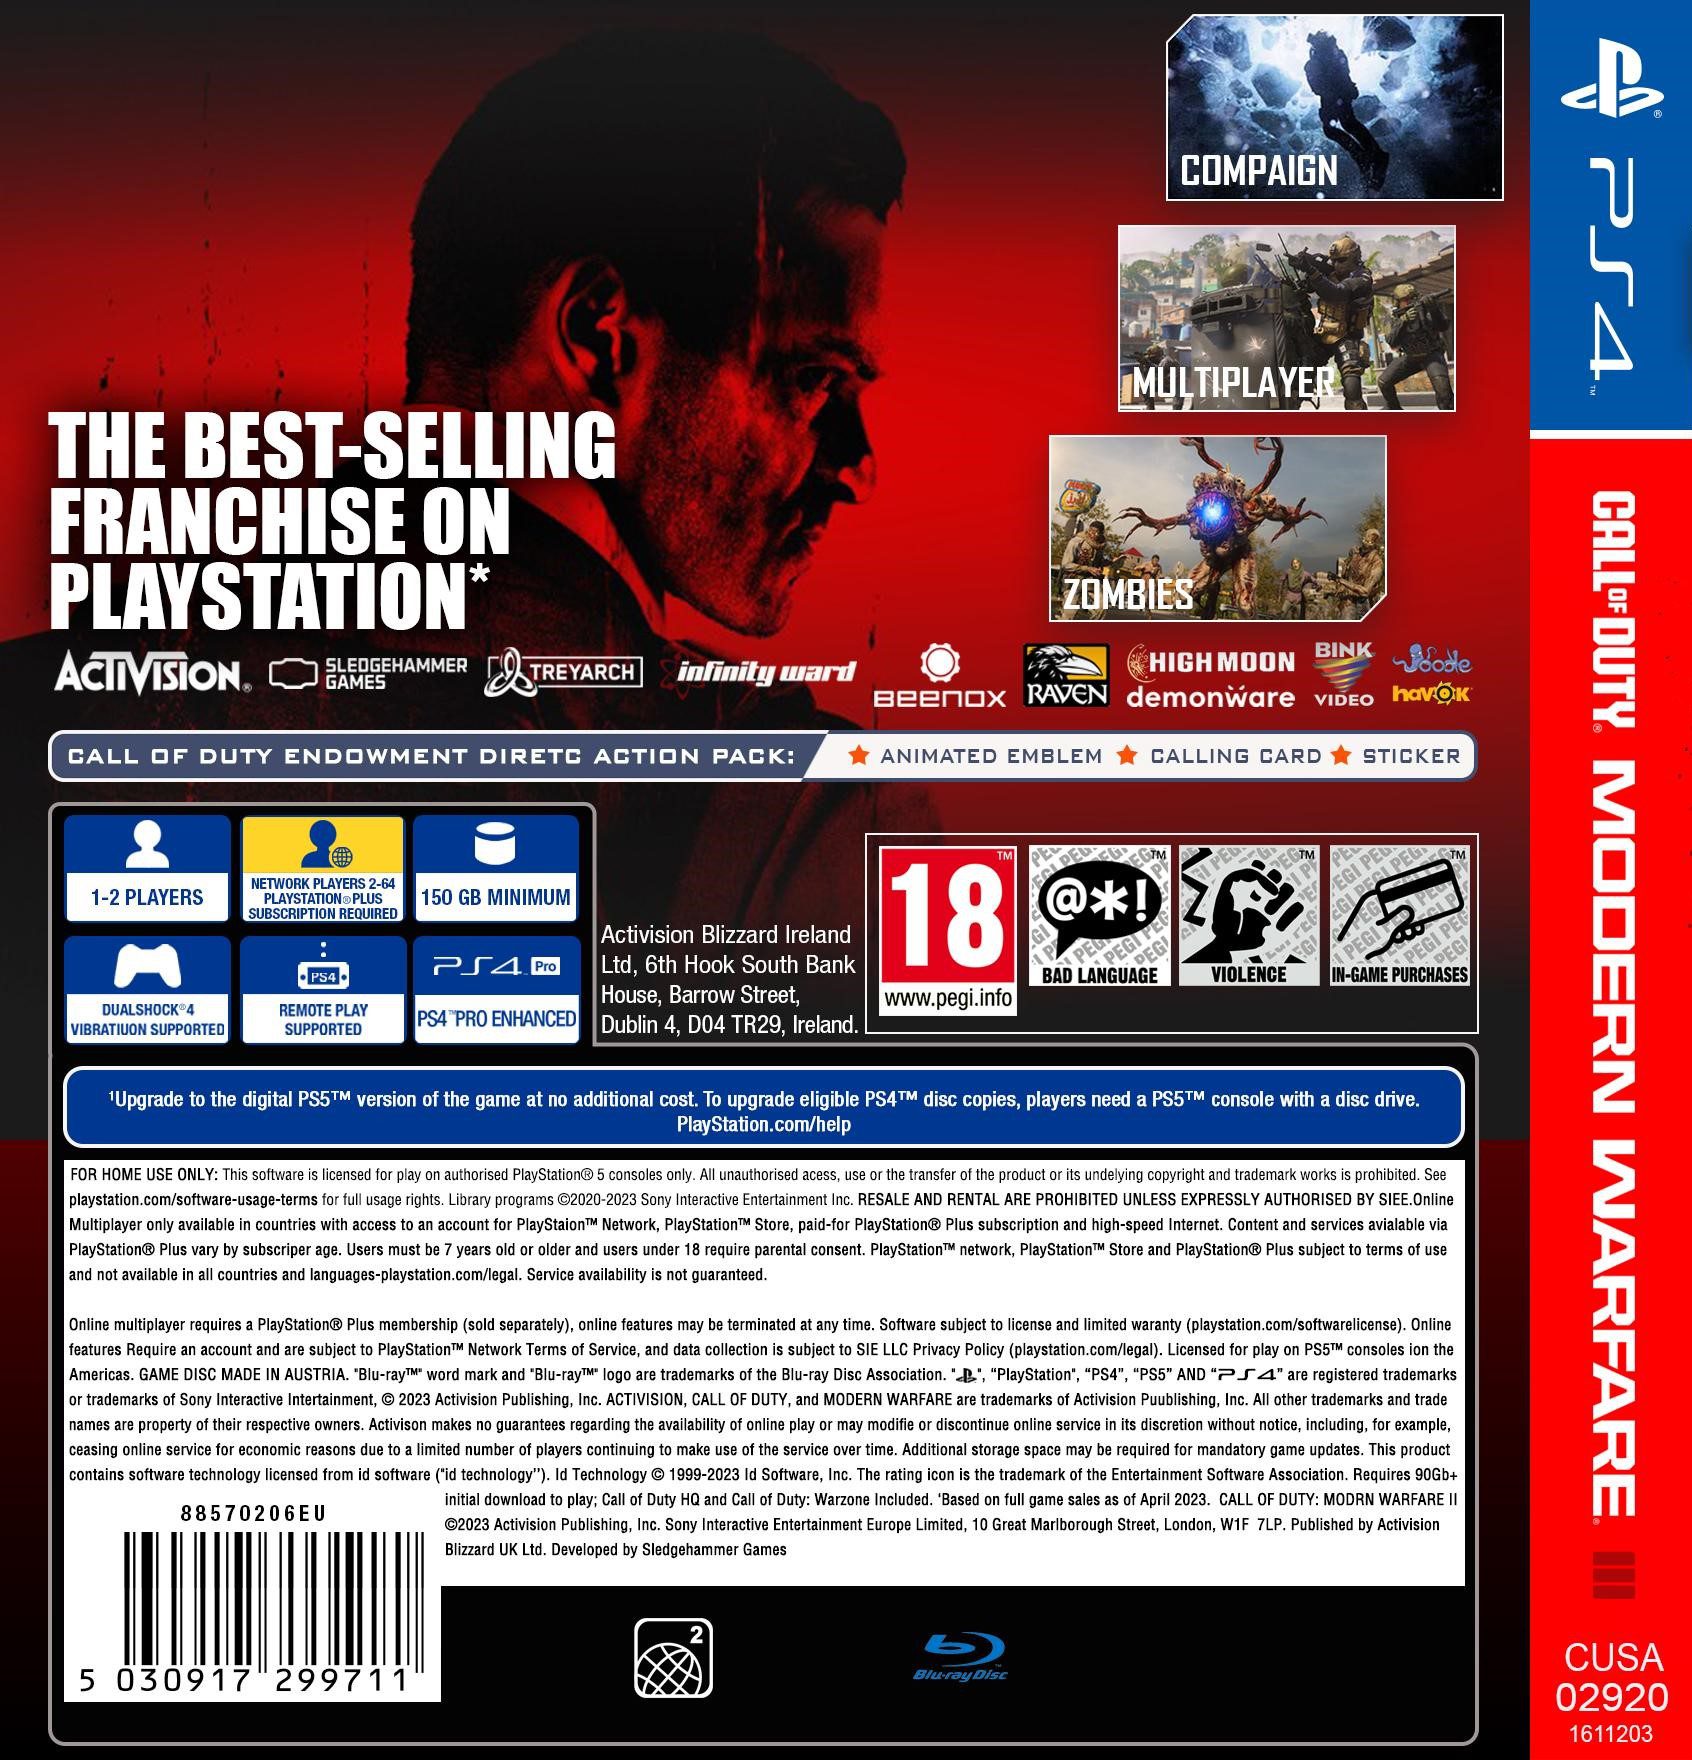 Buy Call of Duty: Modern Warfare 3 III PS4 (New) - Zozila